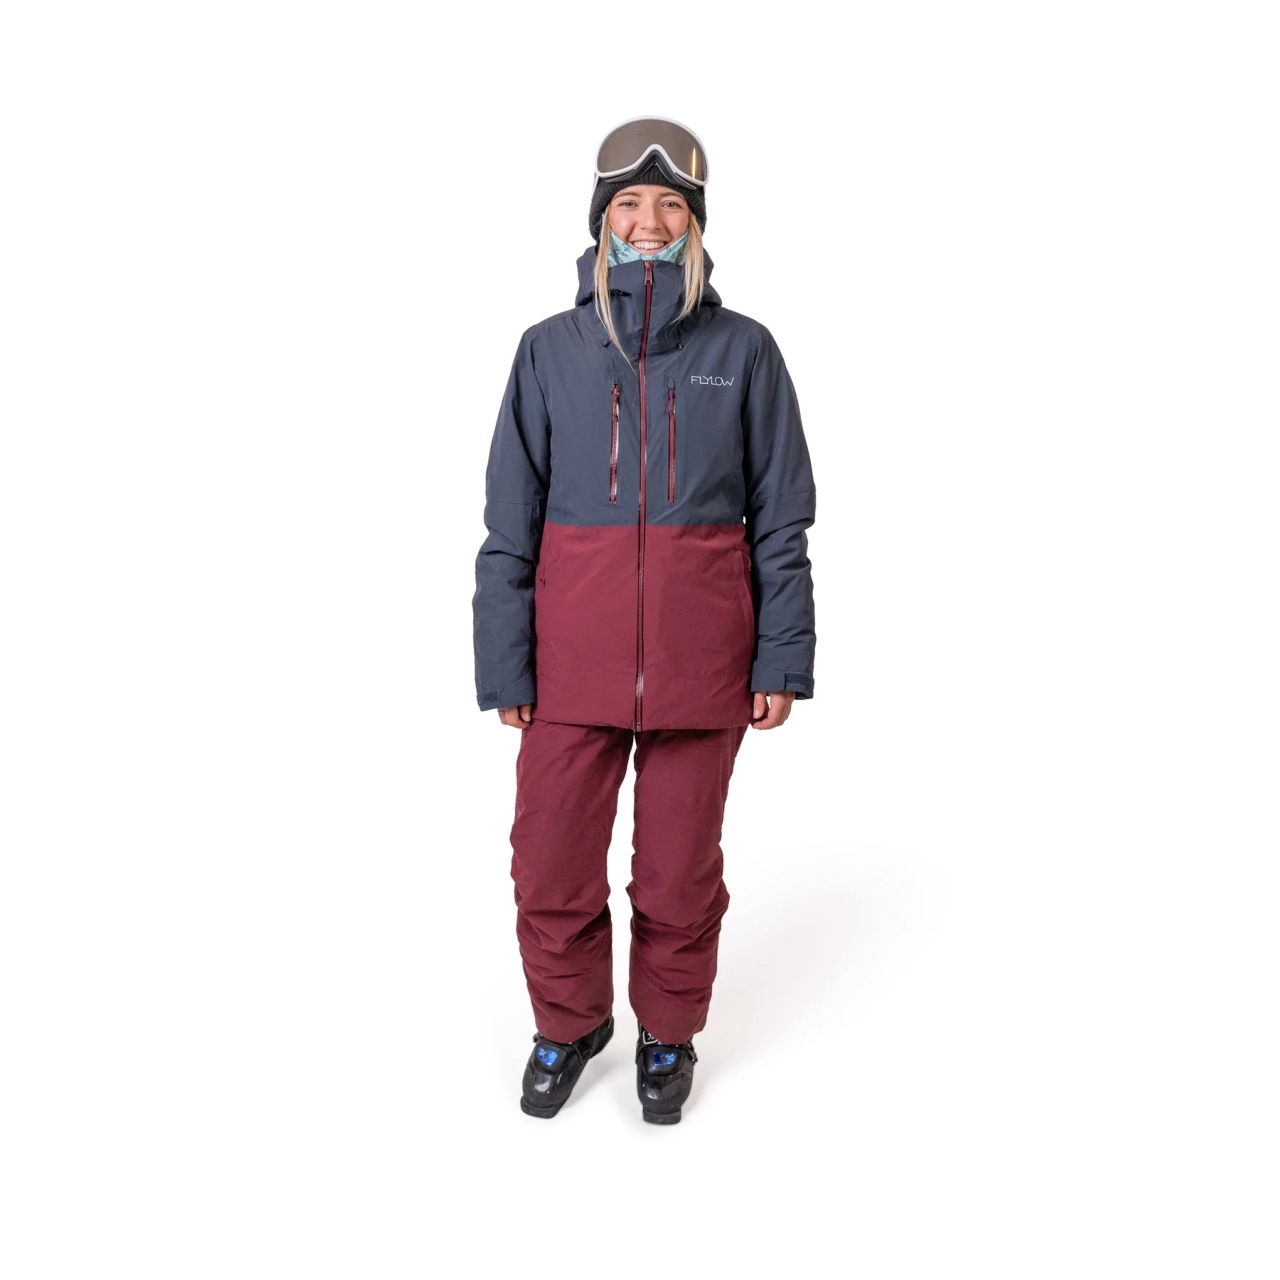 Amigo por correspondencia Aislar Deshacer Flylow Avery Jacket - Women's | Snowsports Jackets | Technical Shells